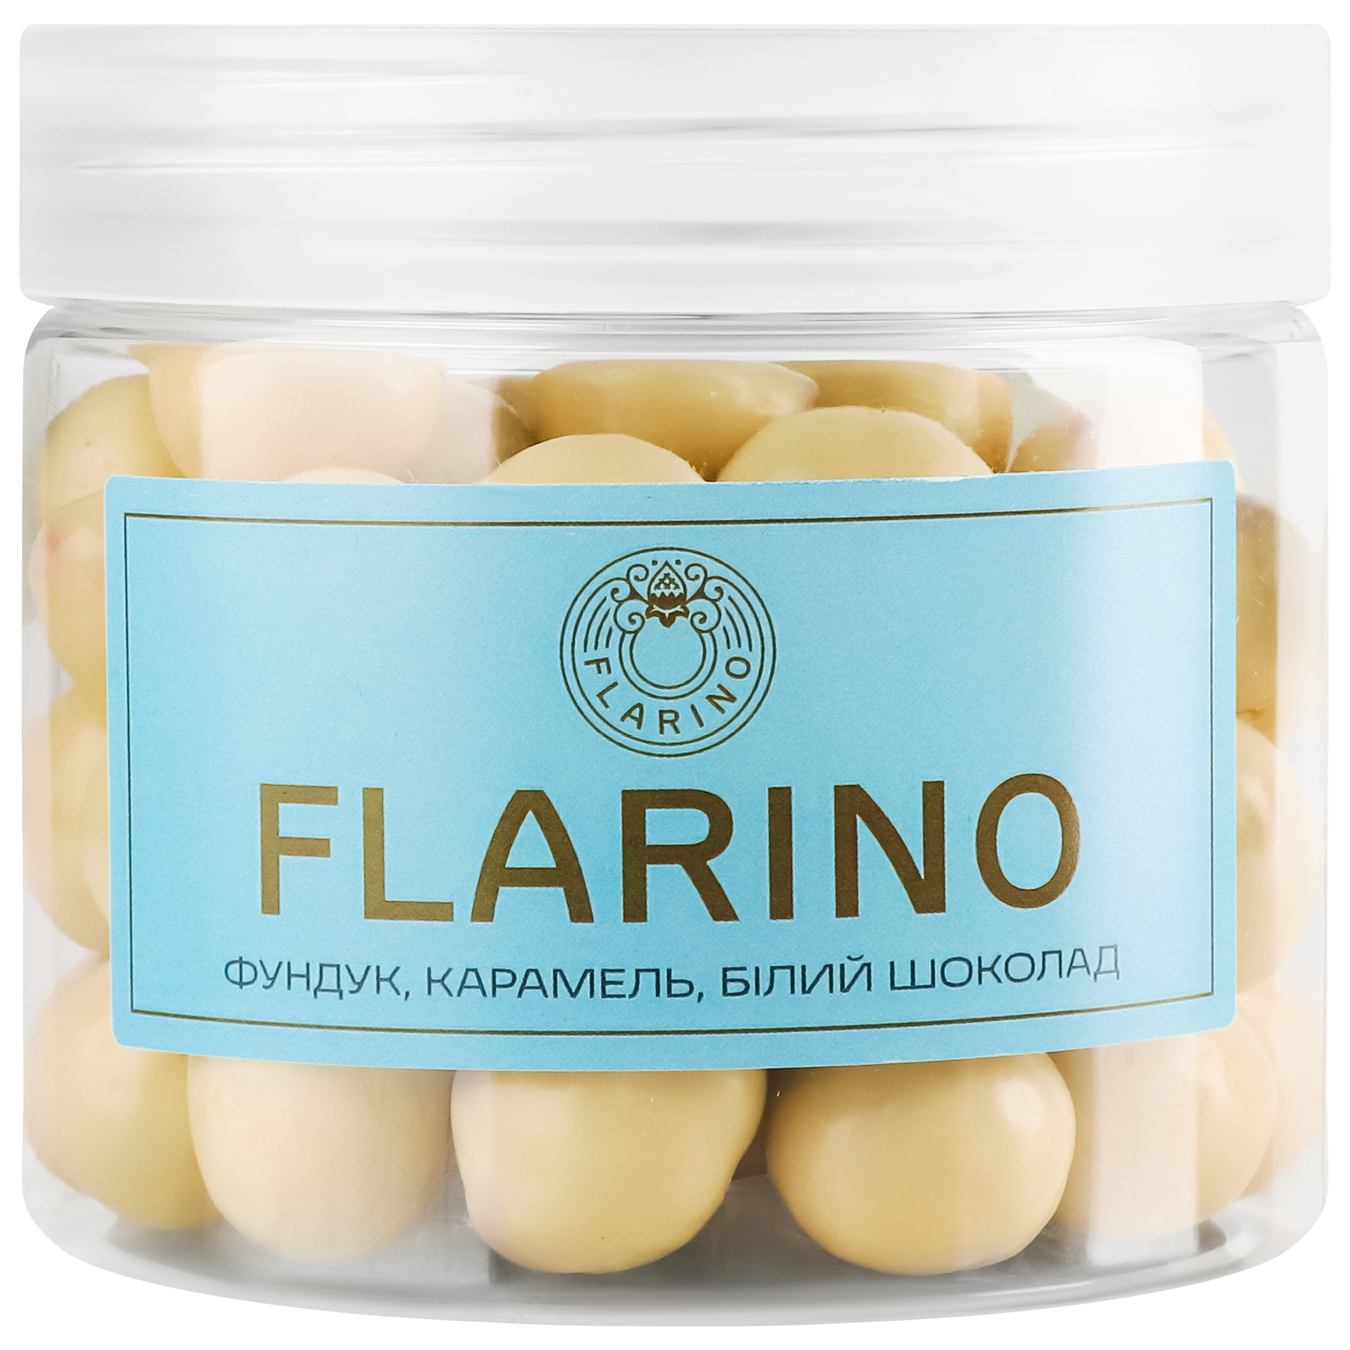 Flarino hazelnut in caramel covered with white chocolate 180g